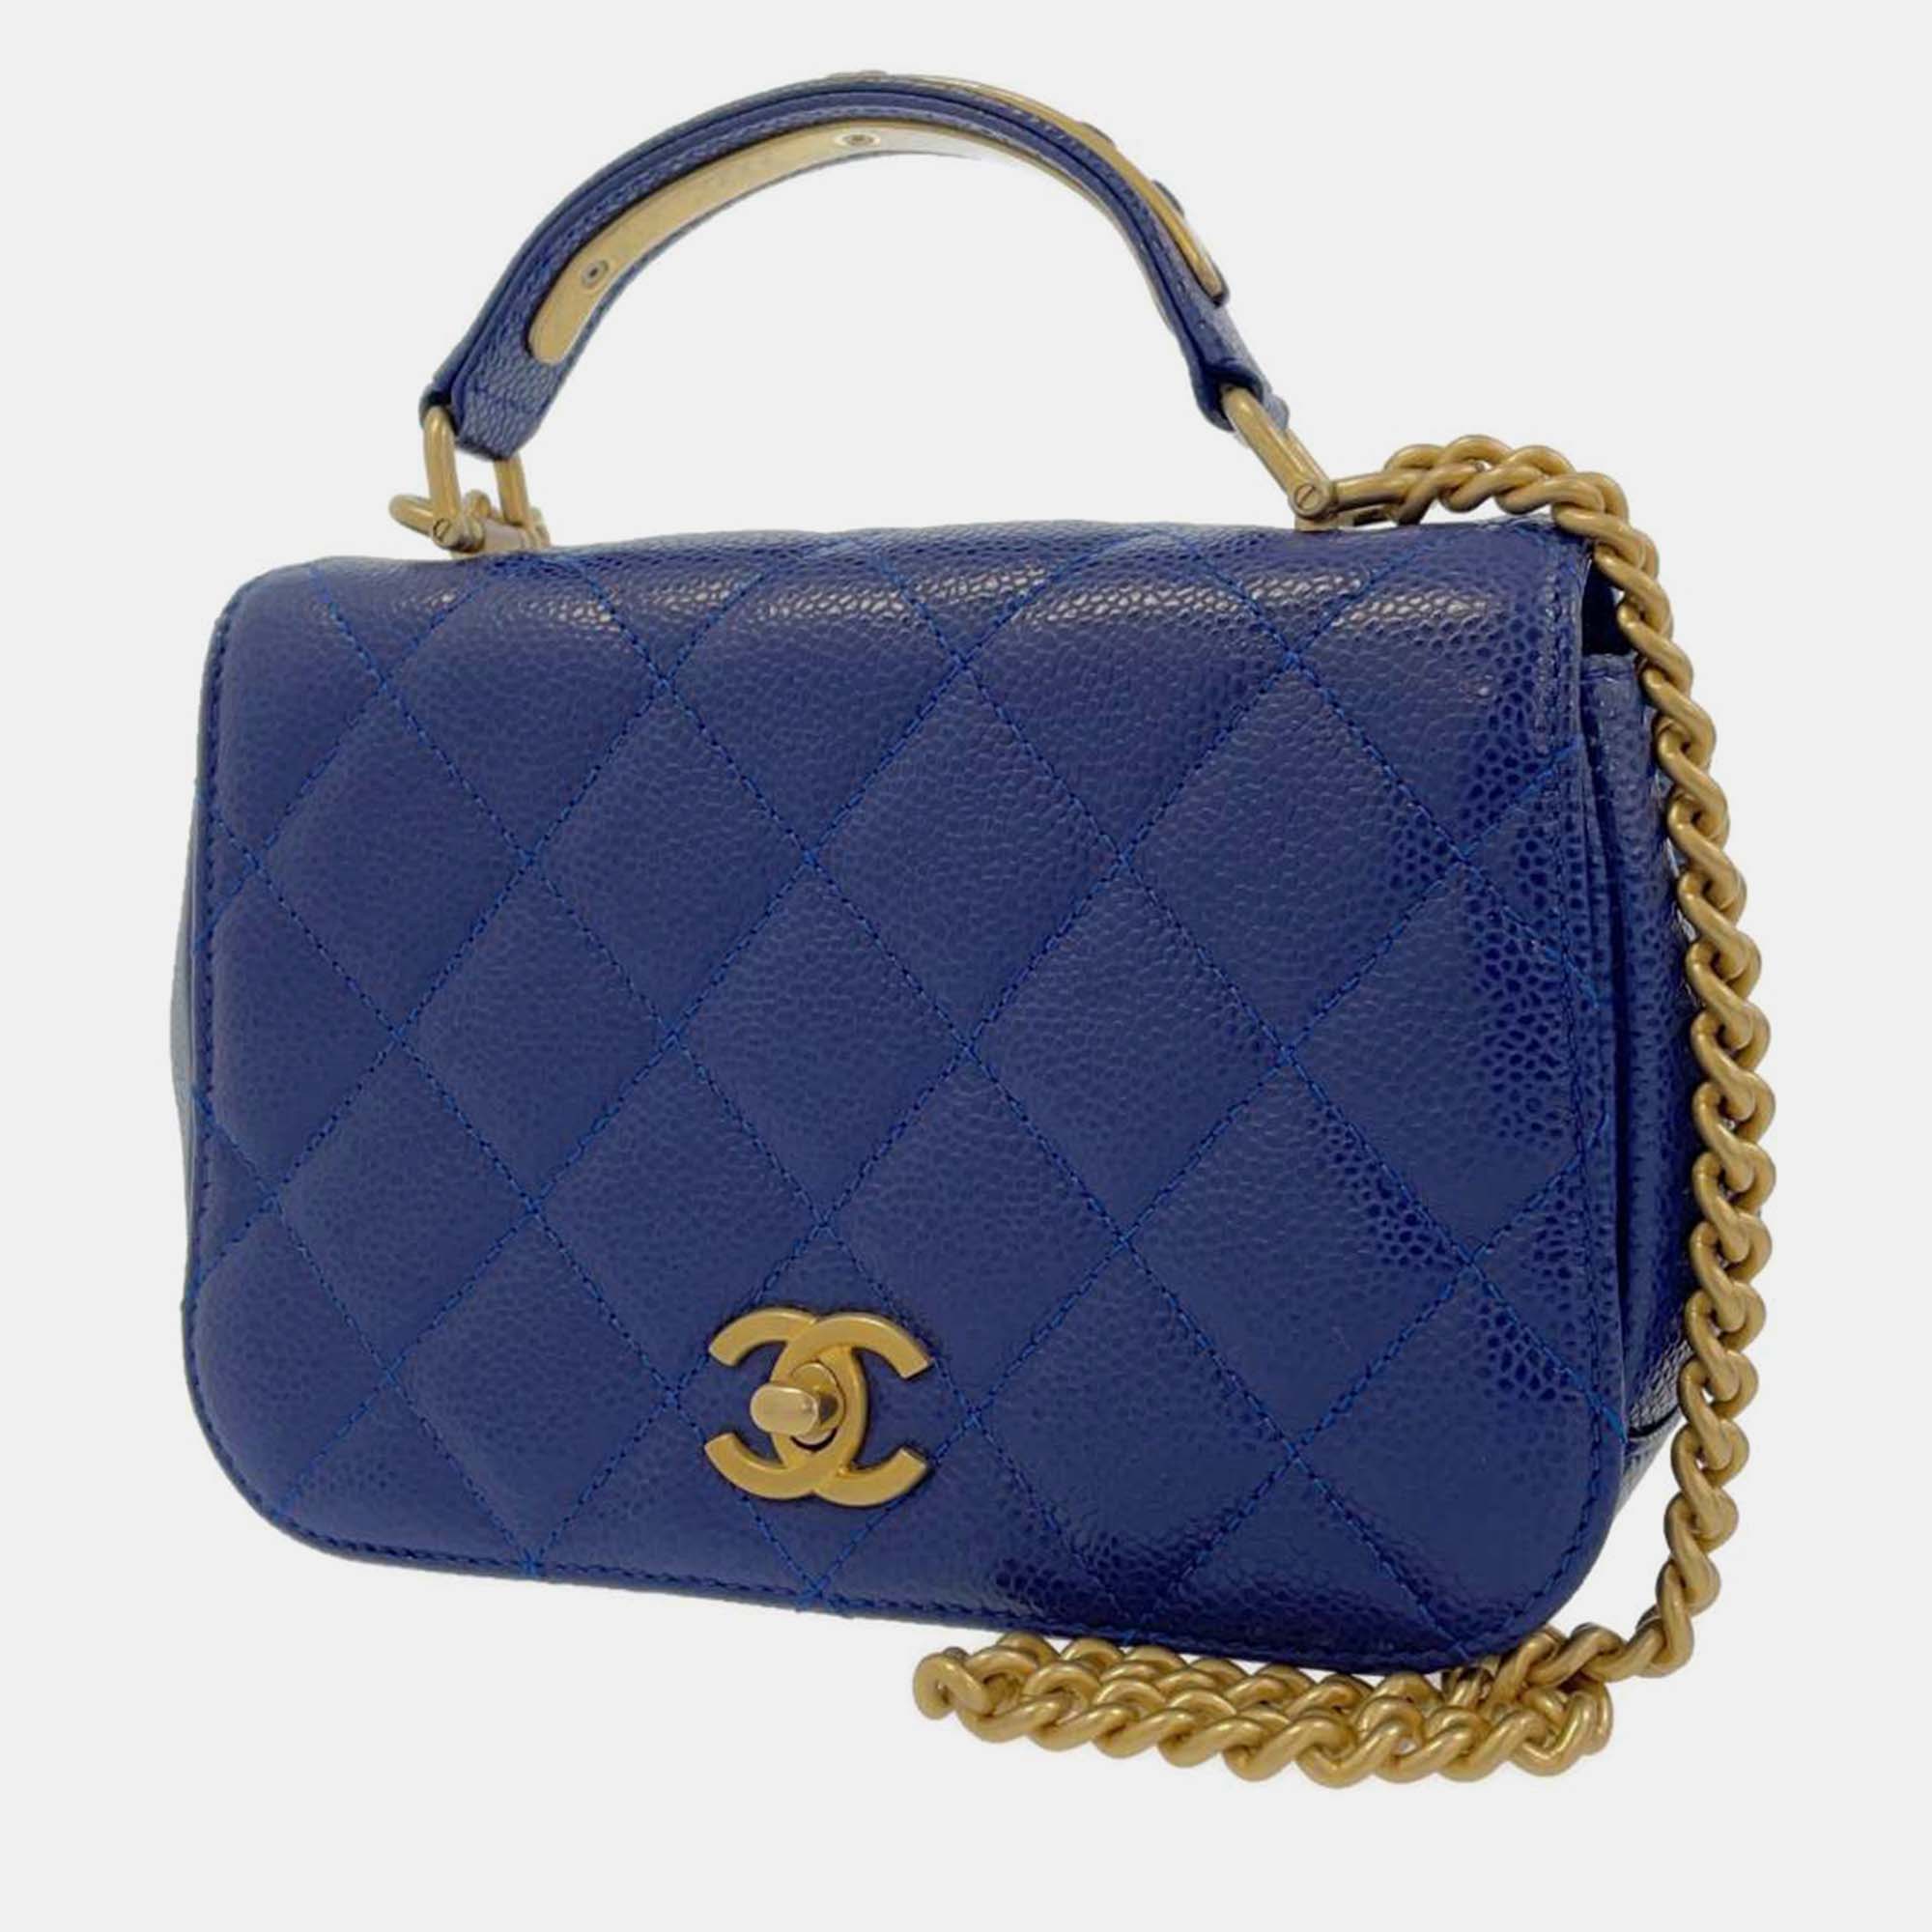 Chanel blue caviar leather flap bag